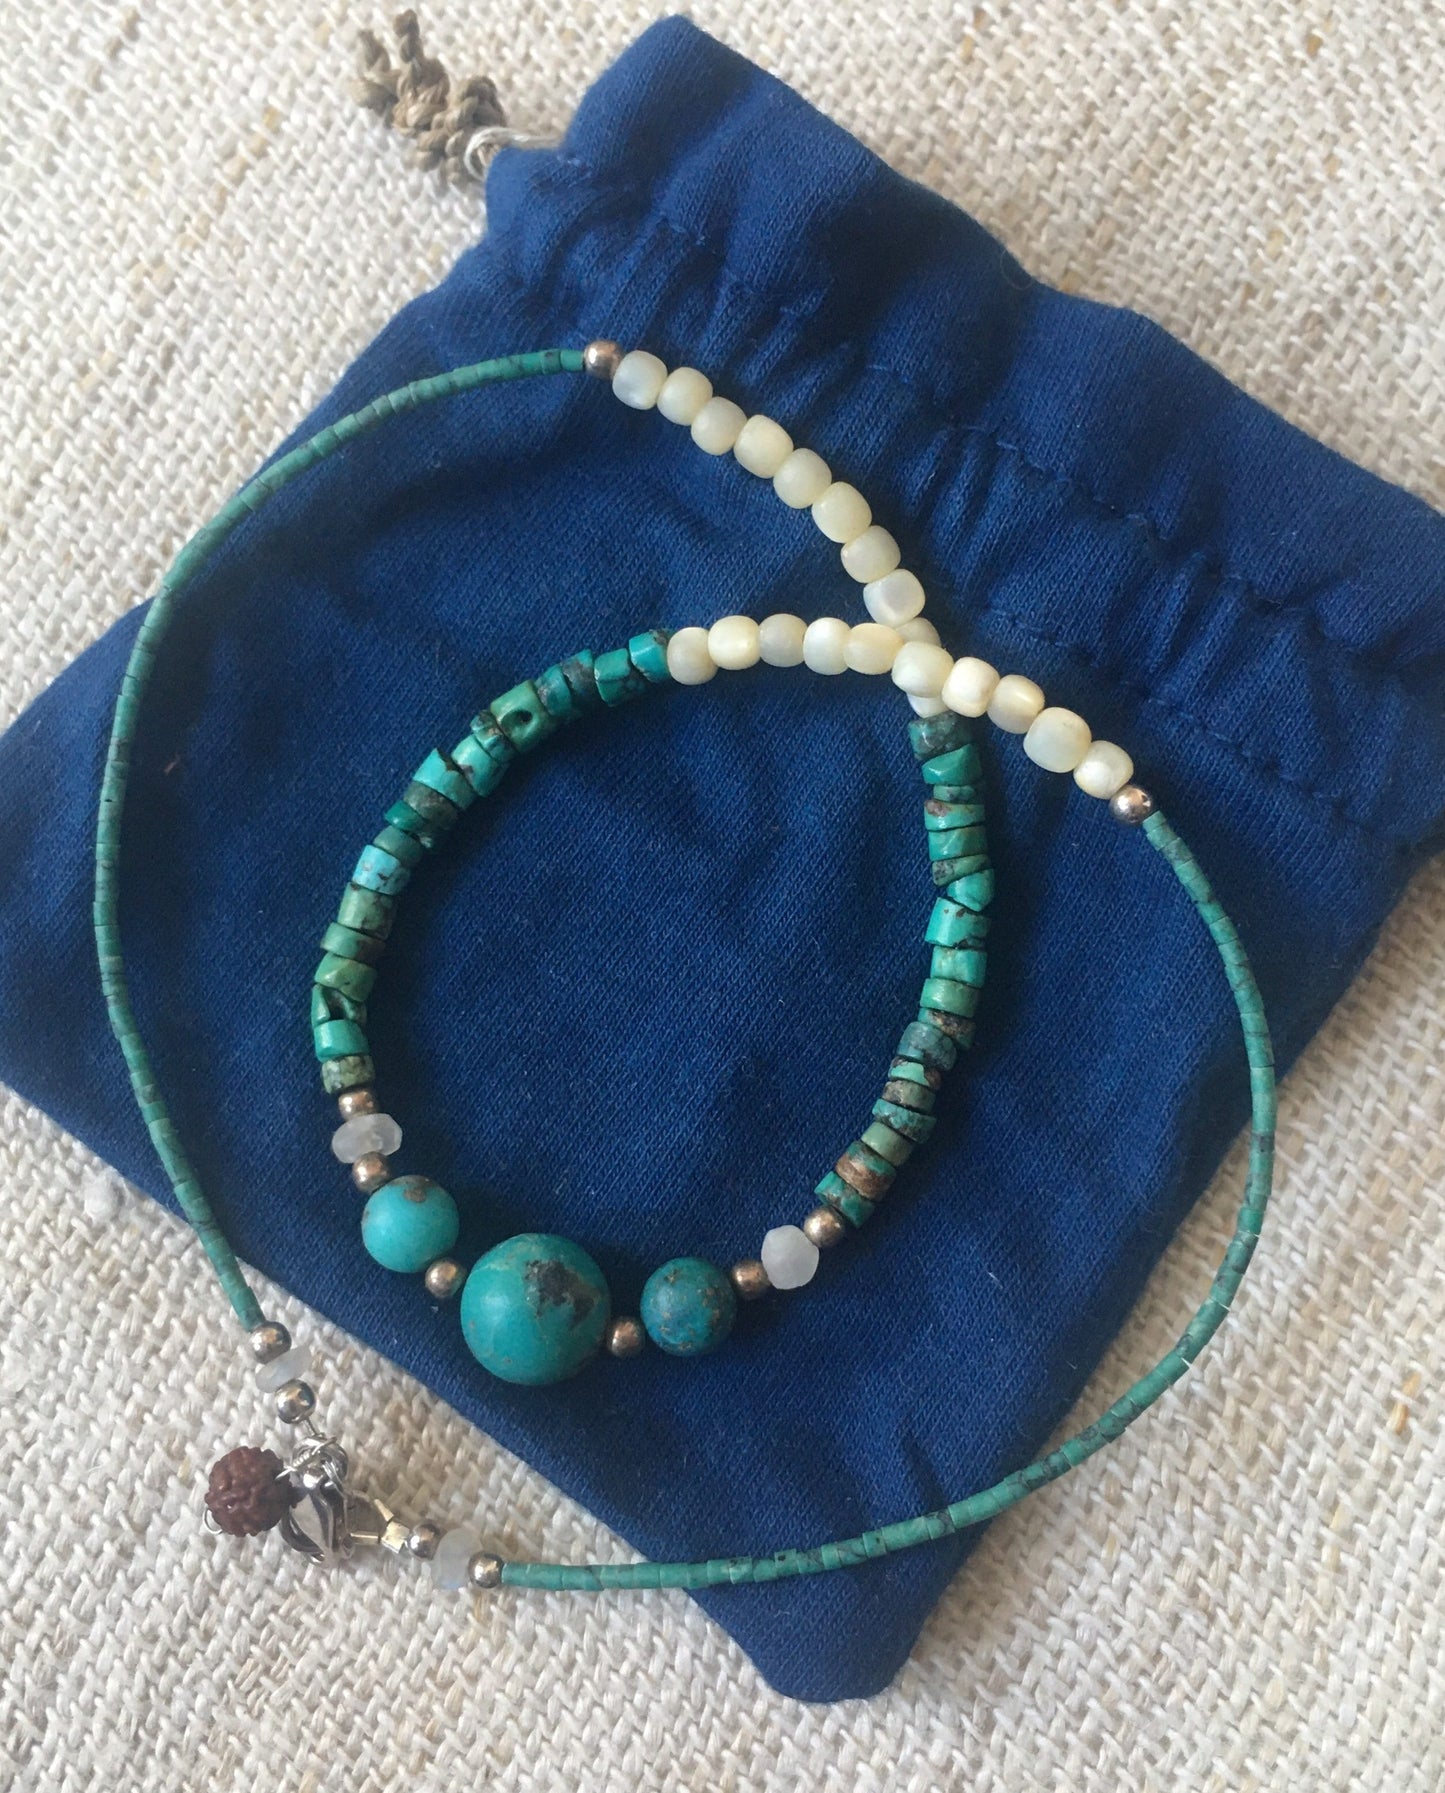 Turquoise Tumbled Beads & Polished Pearls and rudraksha bead.